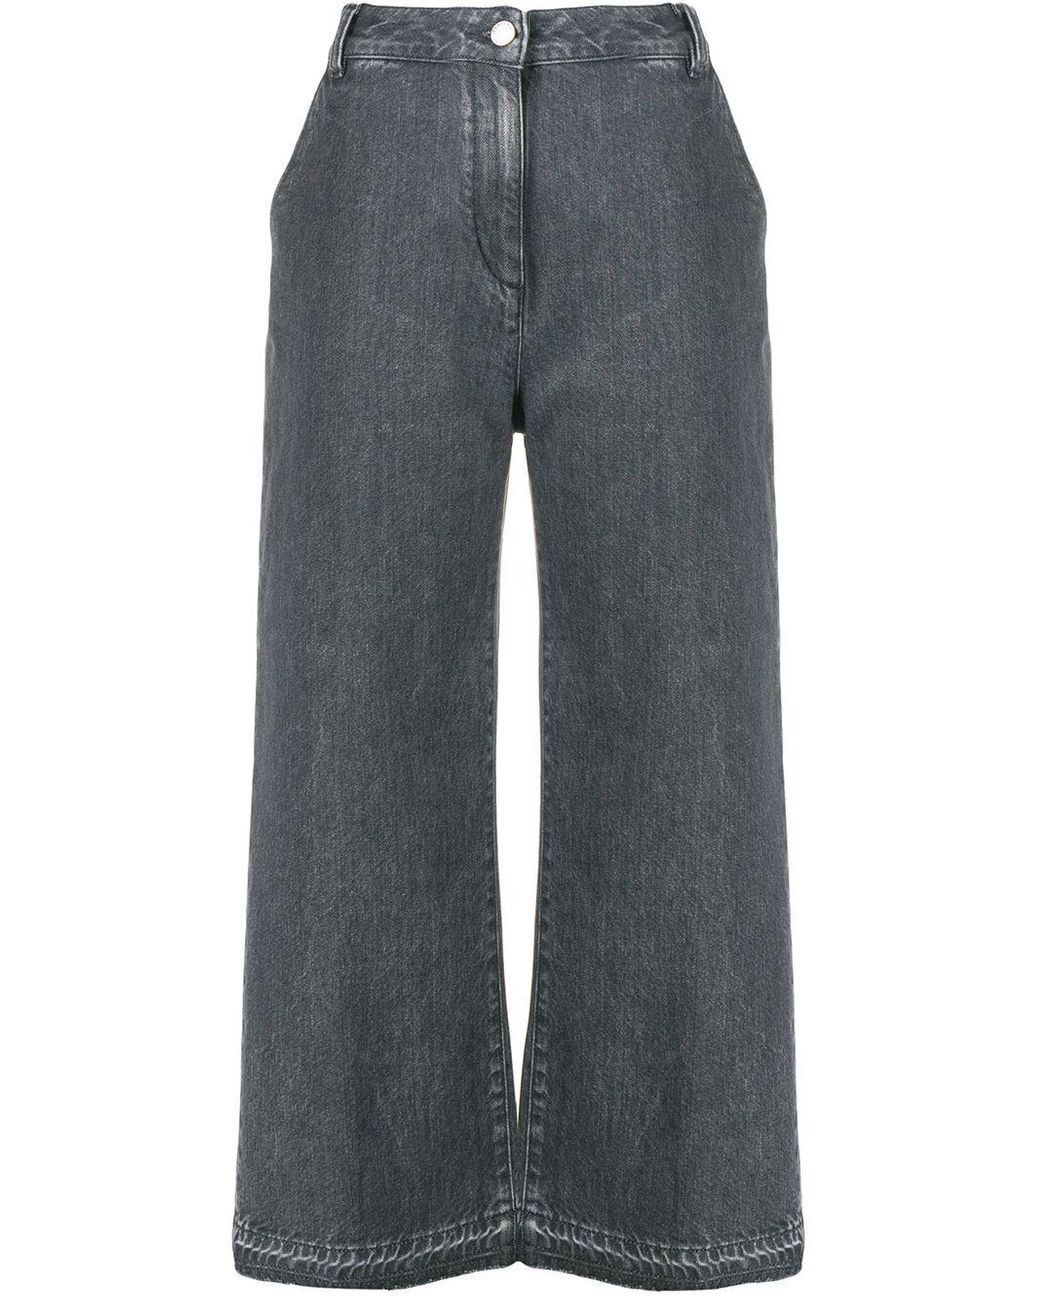 Fabiana Filippi Synthetic Flared Trousers in Grey (Gray) - Lyst